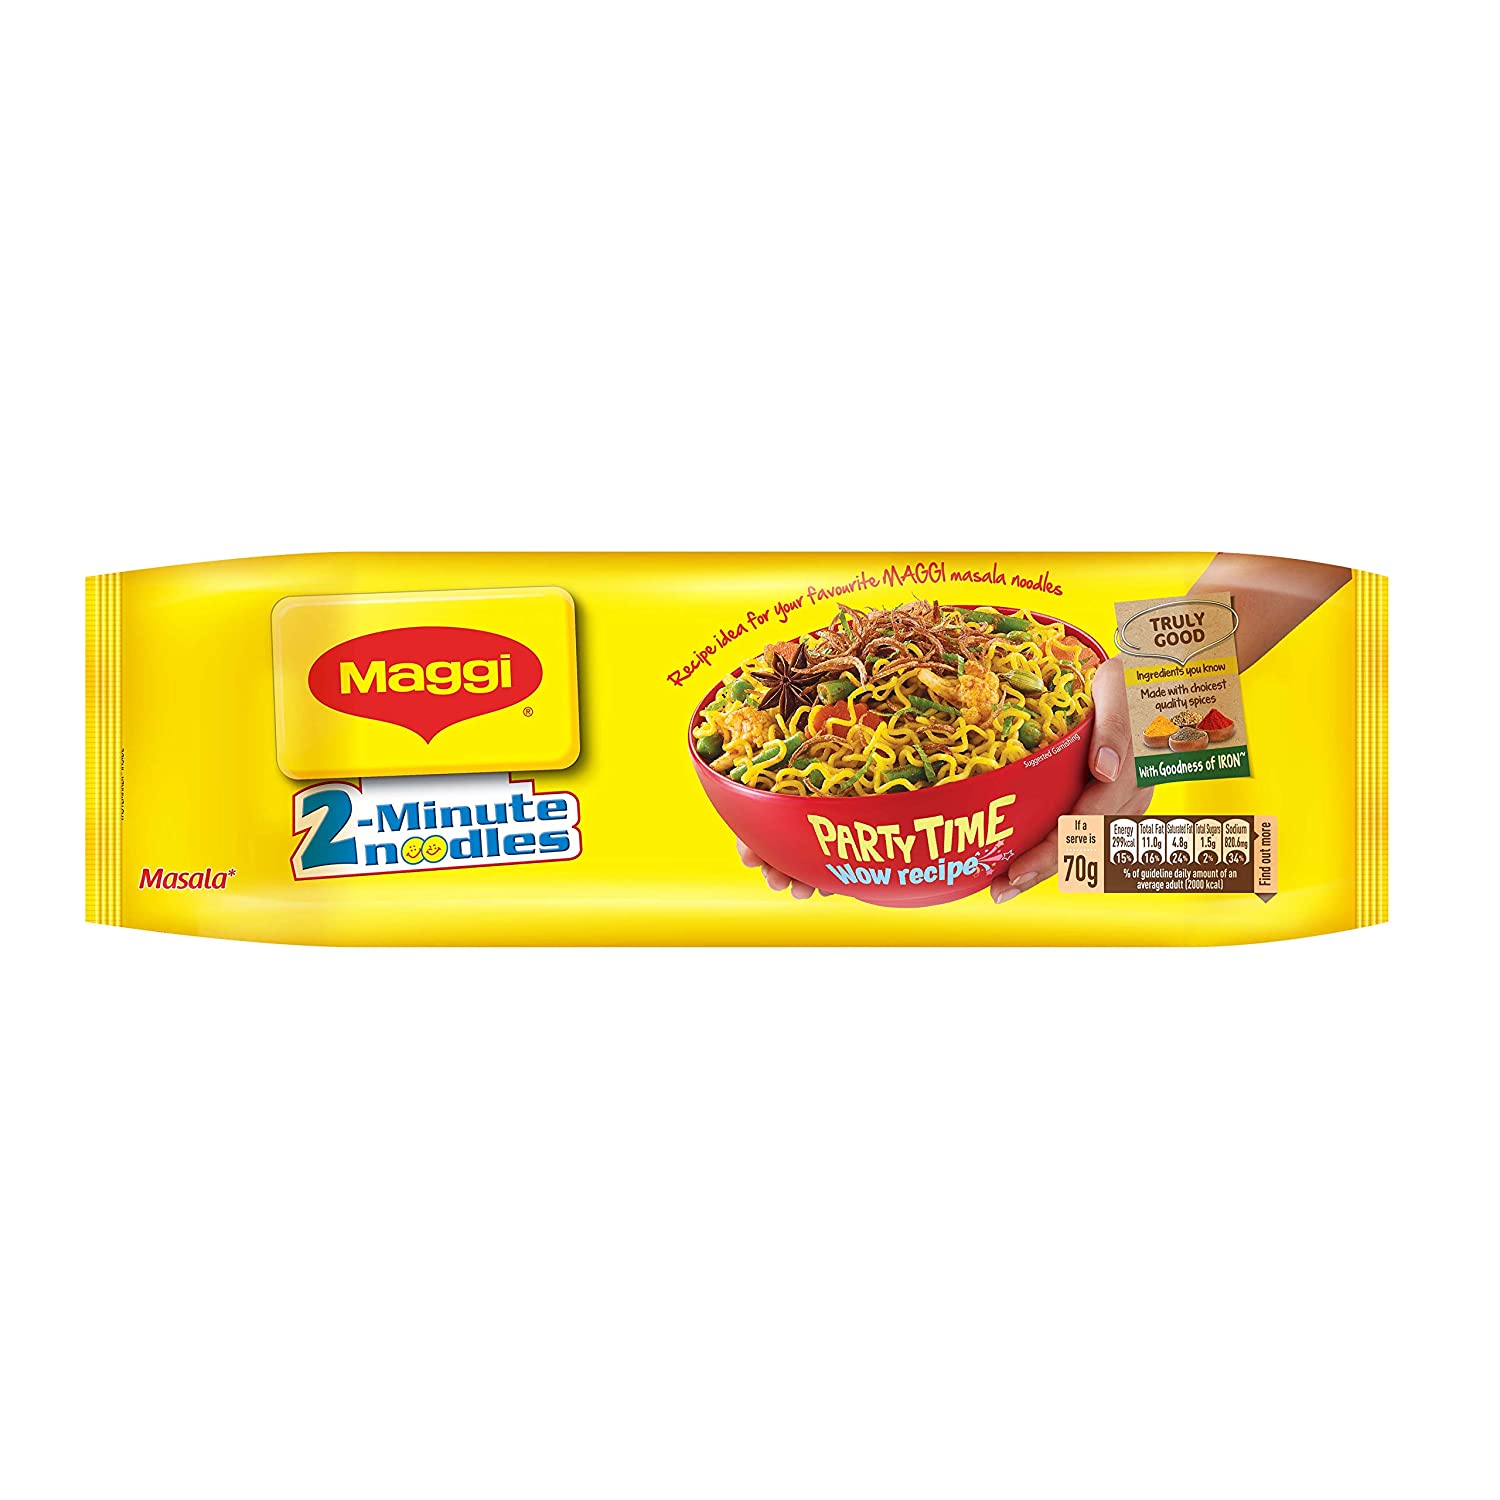 Maggi 2-Minute Instant Noodles – Masala, 560g